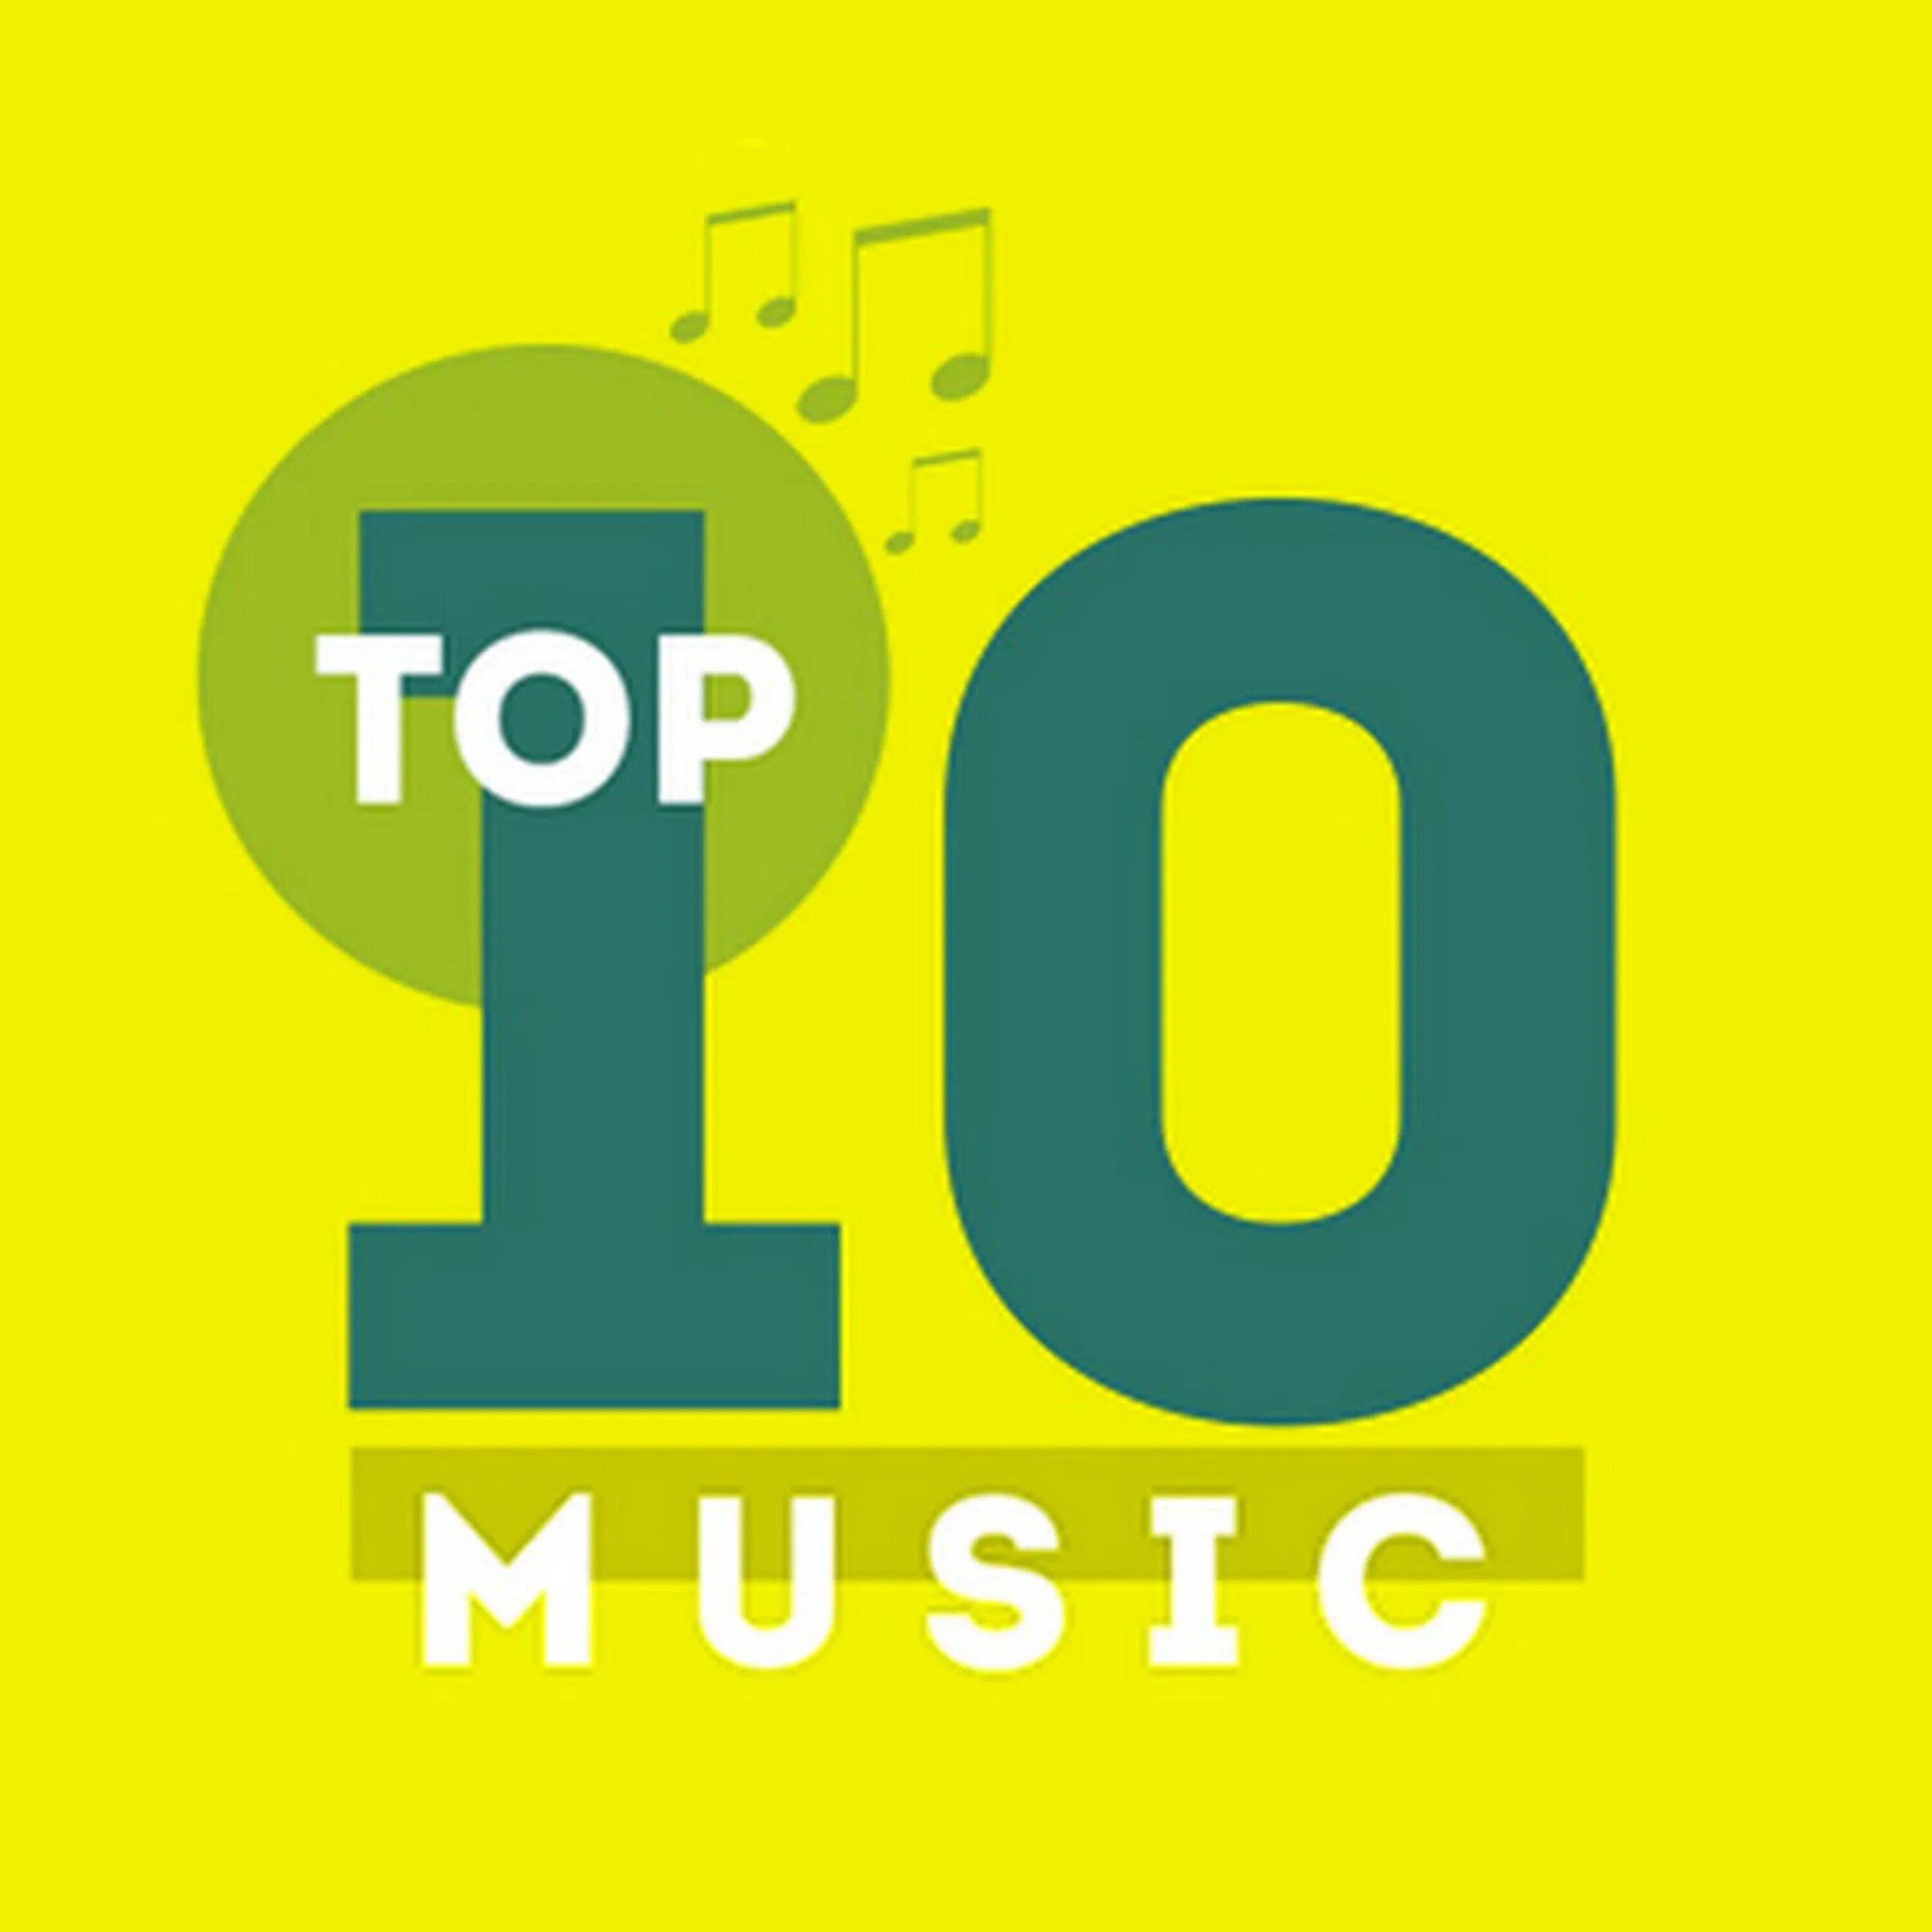 Top best music. Топ 10 музыка. Музыкальная 10. Топ 10 КРУТЫХ песен. Top 10 Music image.